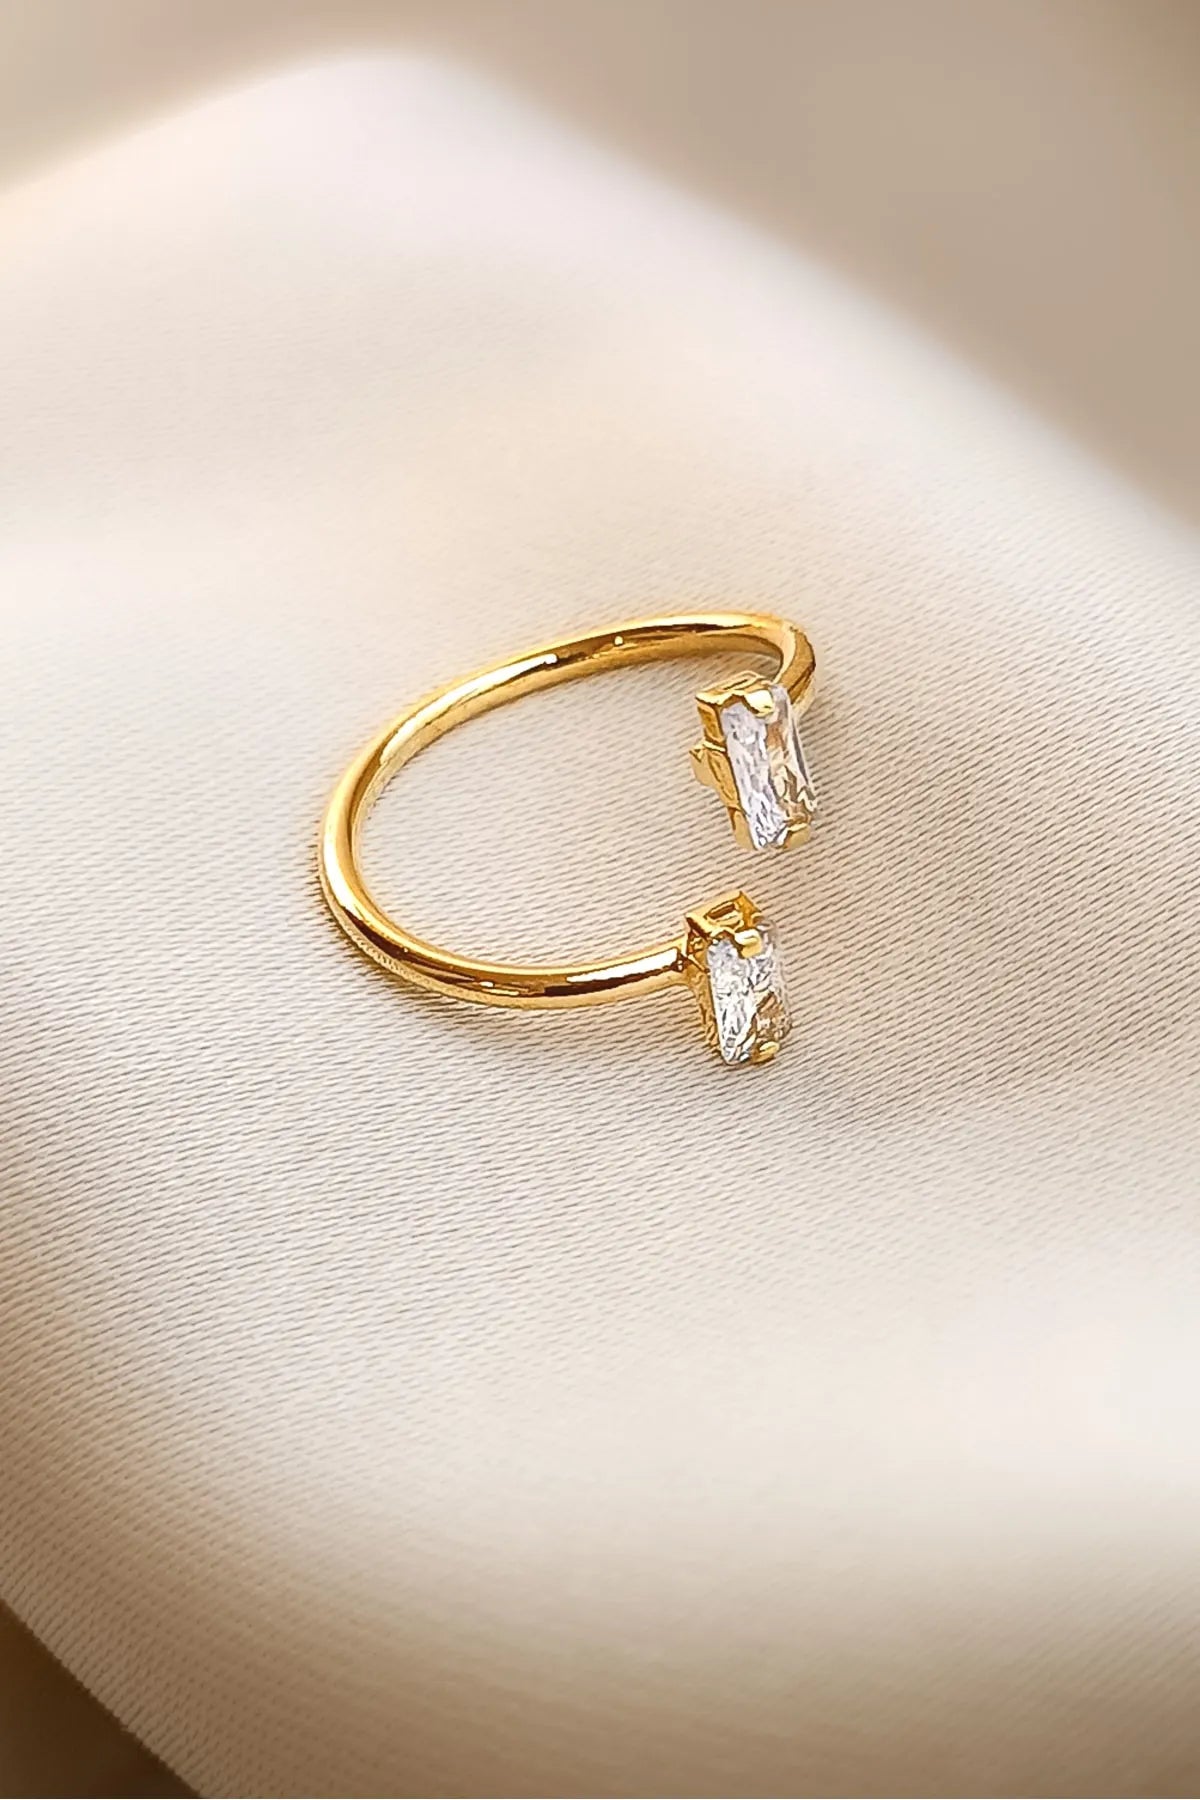 Elegant Adjustable Double Baguette Stone Gold Plated Ring - Modern Minimalist Design for Women